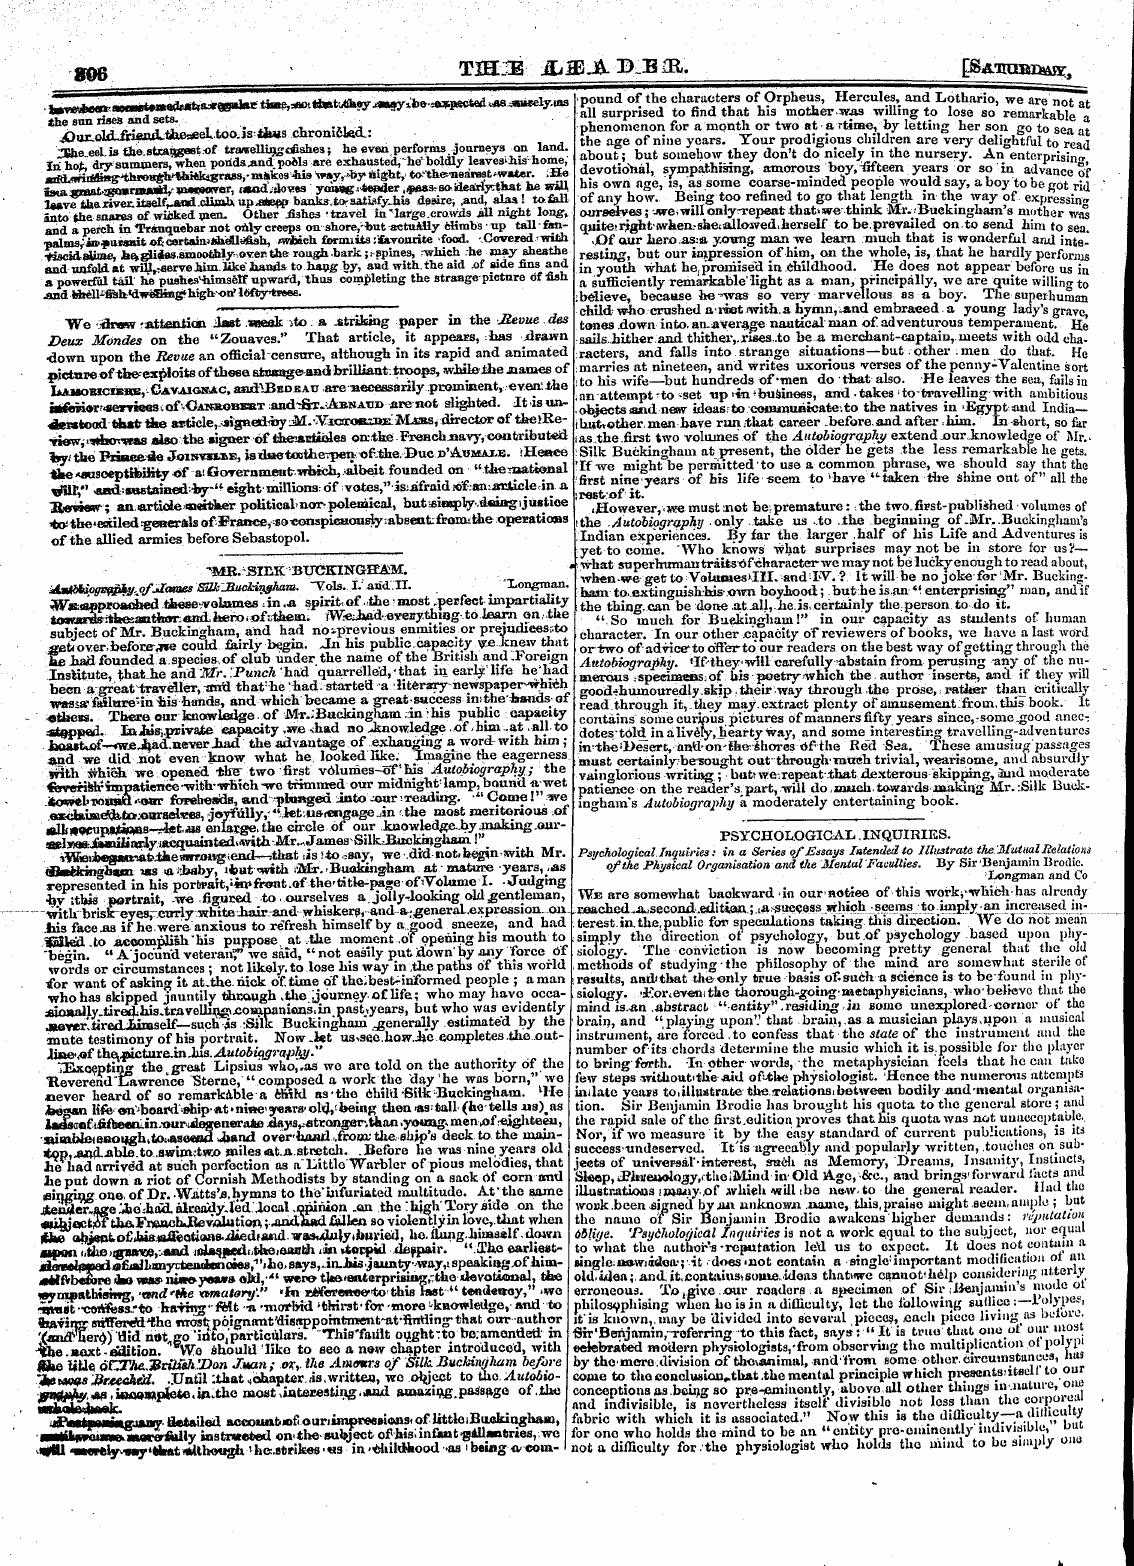 Leader (1850-1860): jS F Y, 2nd edition - Hob Tmm Jujbj^Bbm. Esatidbmis:S